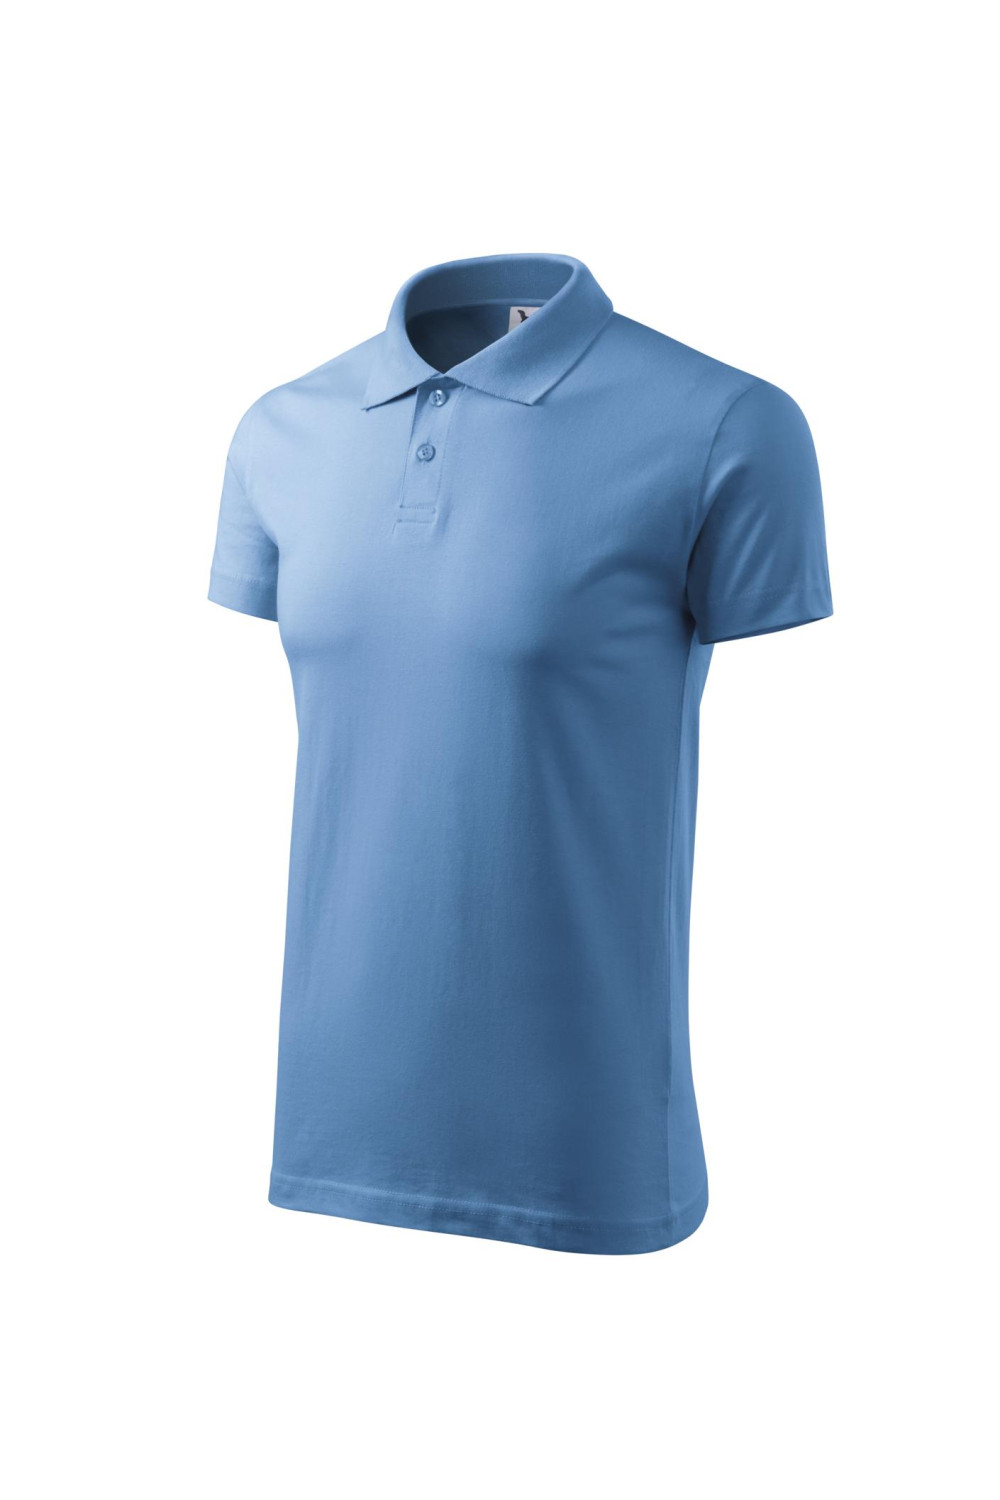 SINGLE J. 202 MALFINI ADLER Koszulka Polo męska 100% bawełna błękitny